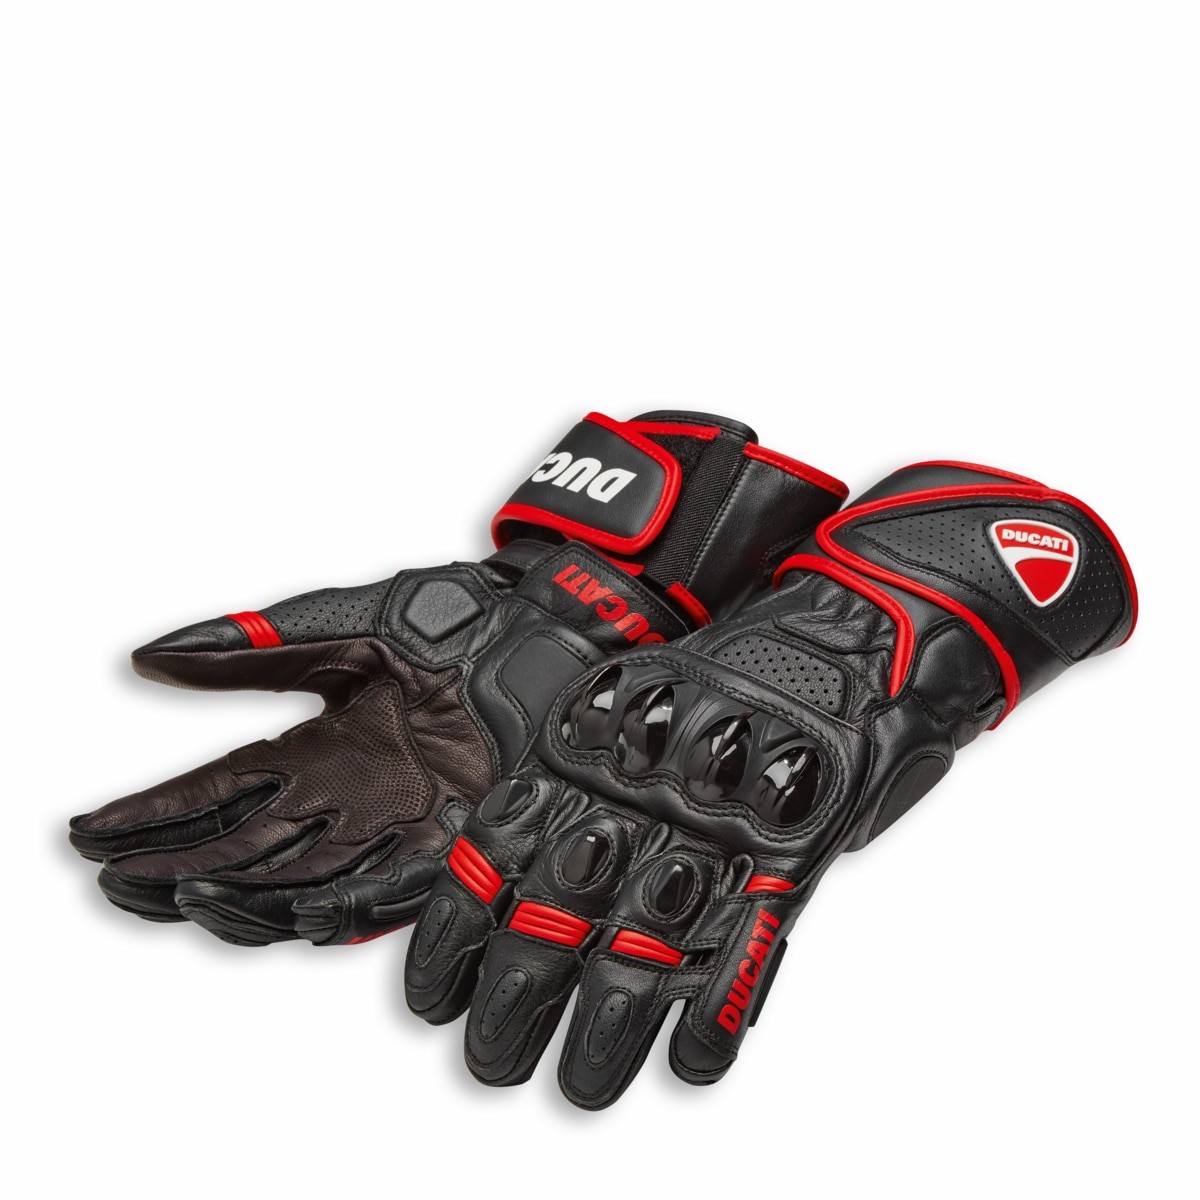 Speed Evo C1 - Leather gloves